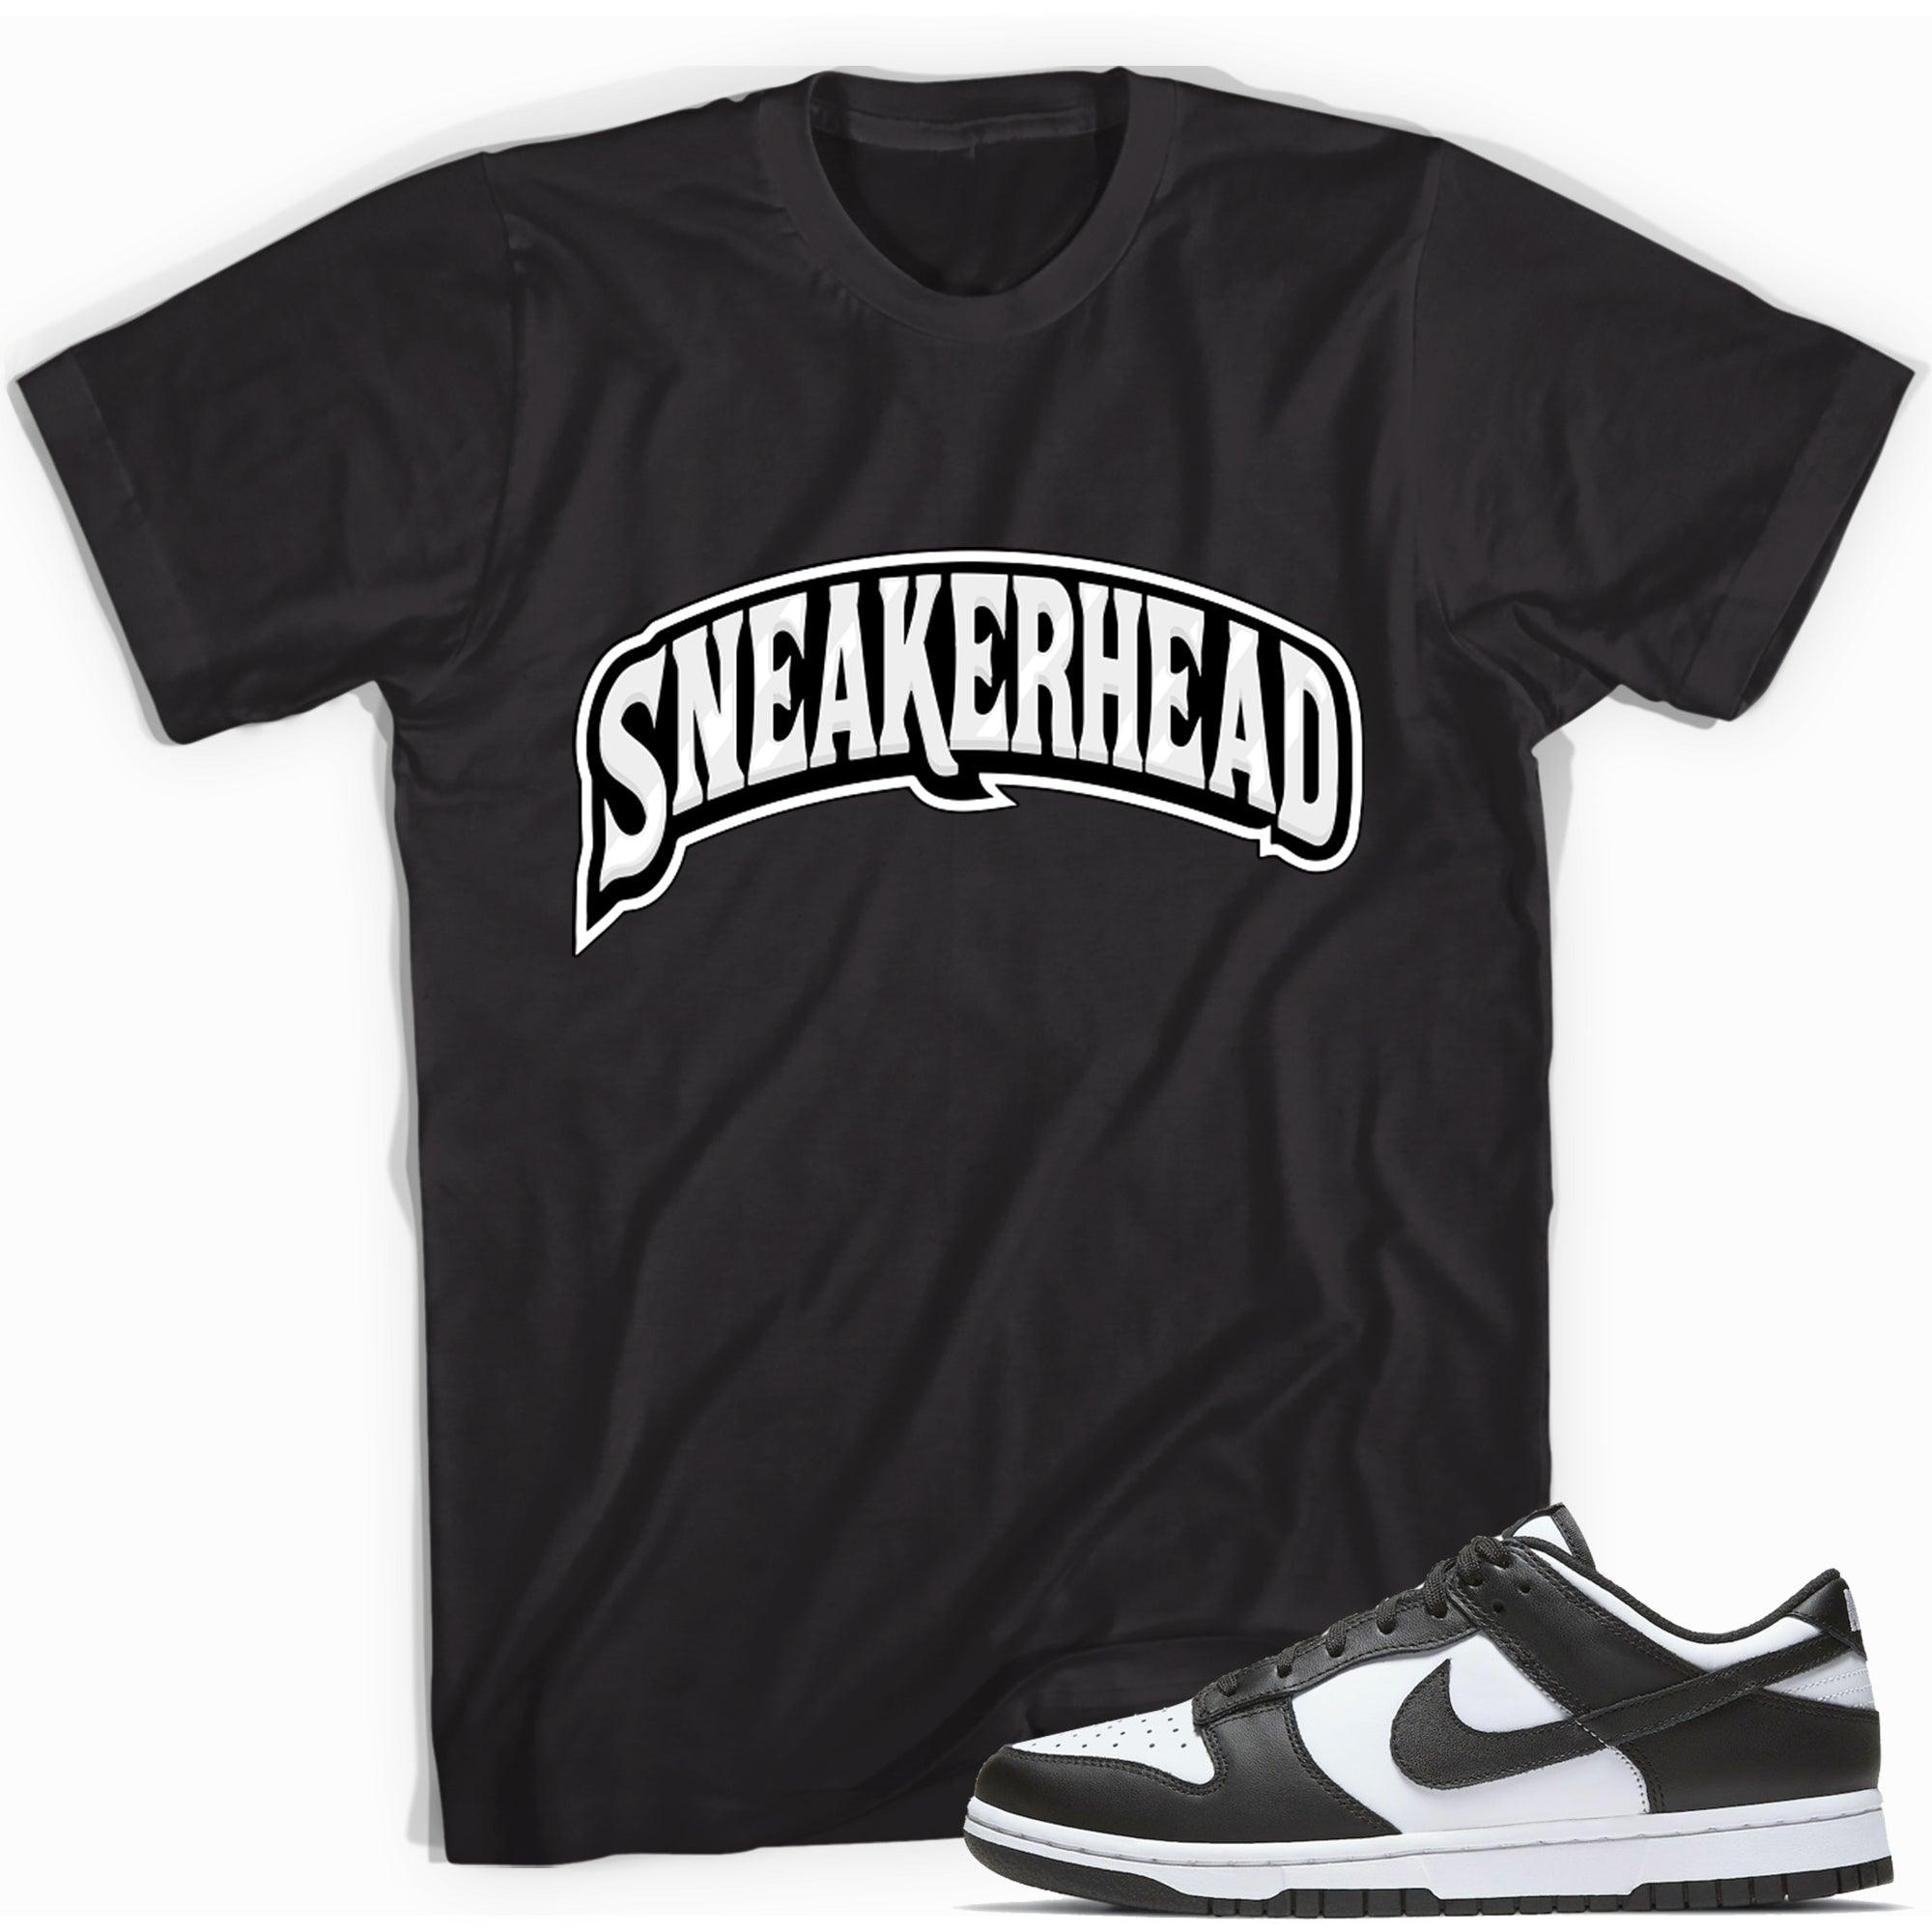 Sneakerhead T-Shirt Dunk Low Retro White Black photo